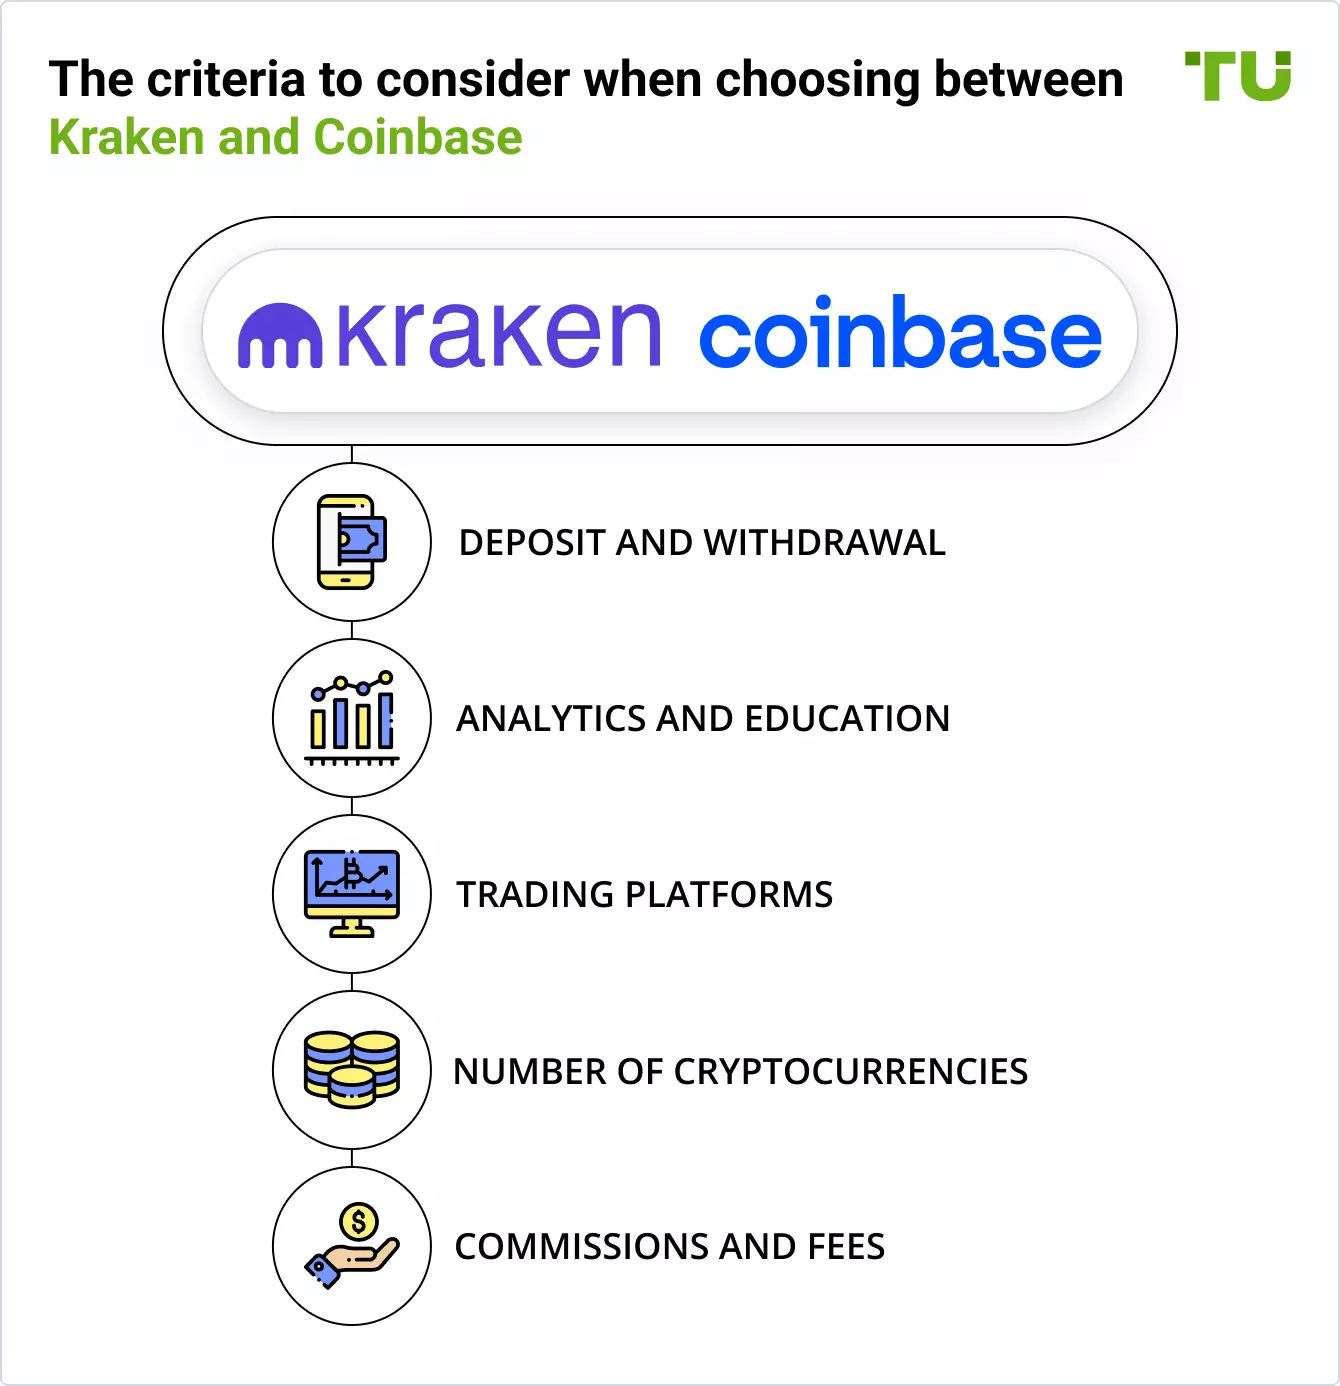 The criteria to consider when choosing between Kraken and Coinbase